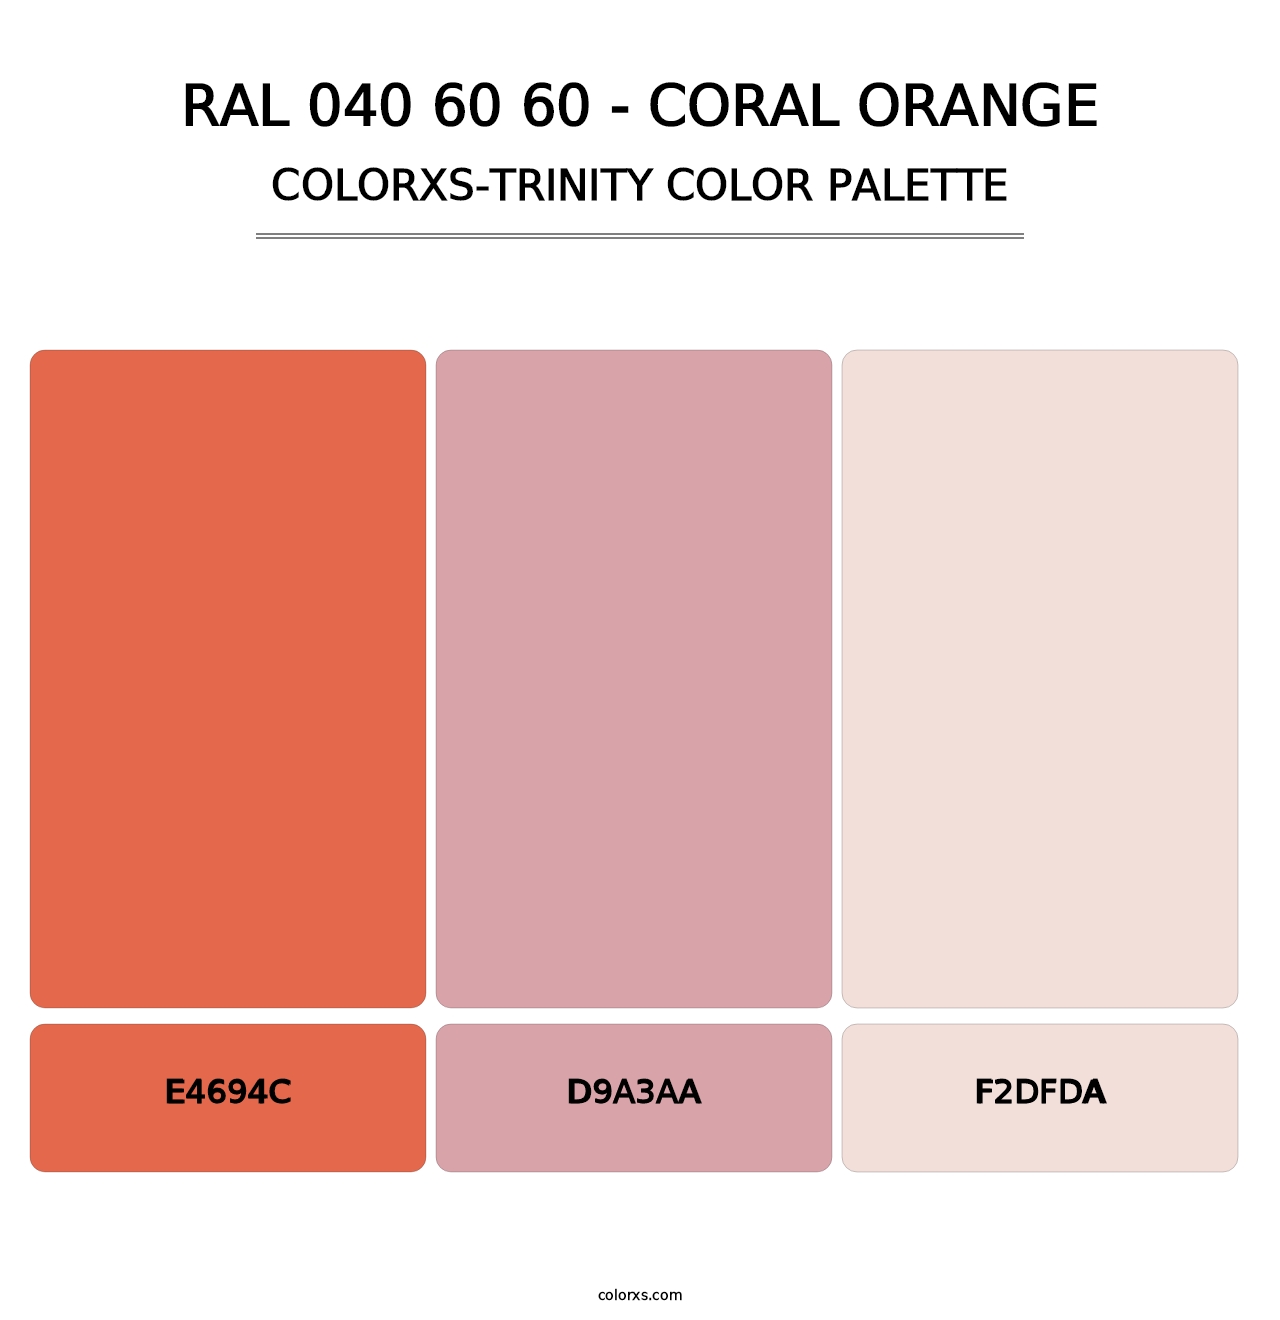 RAL 040 60 60 - Coral Orange - Colorxs Trinity Palette